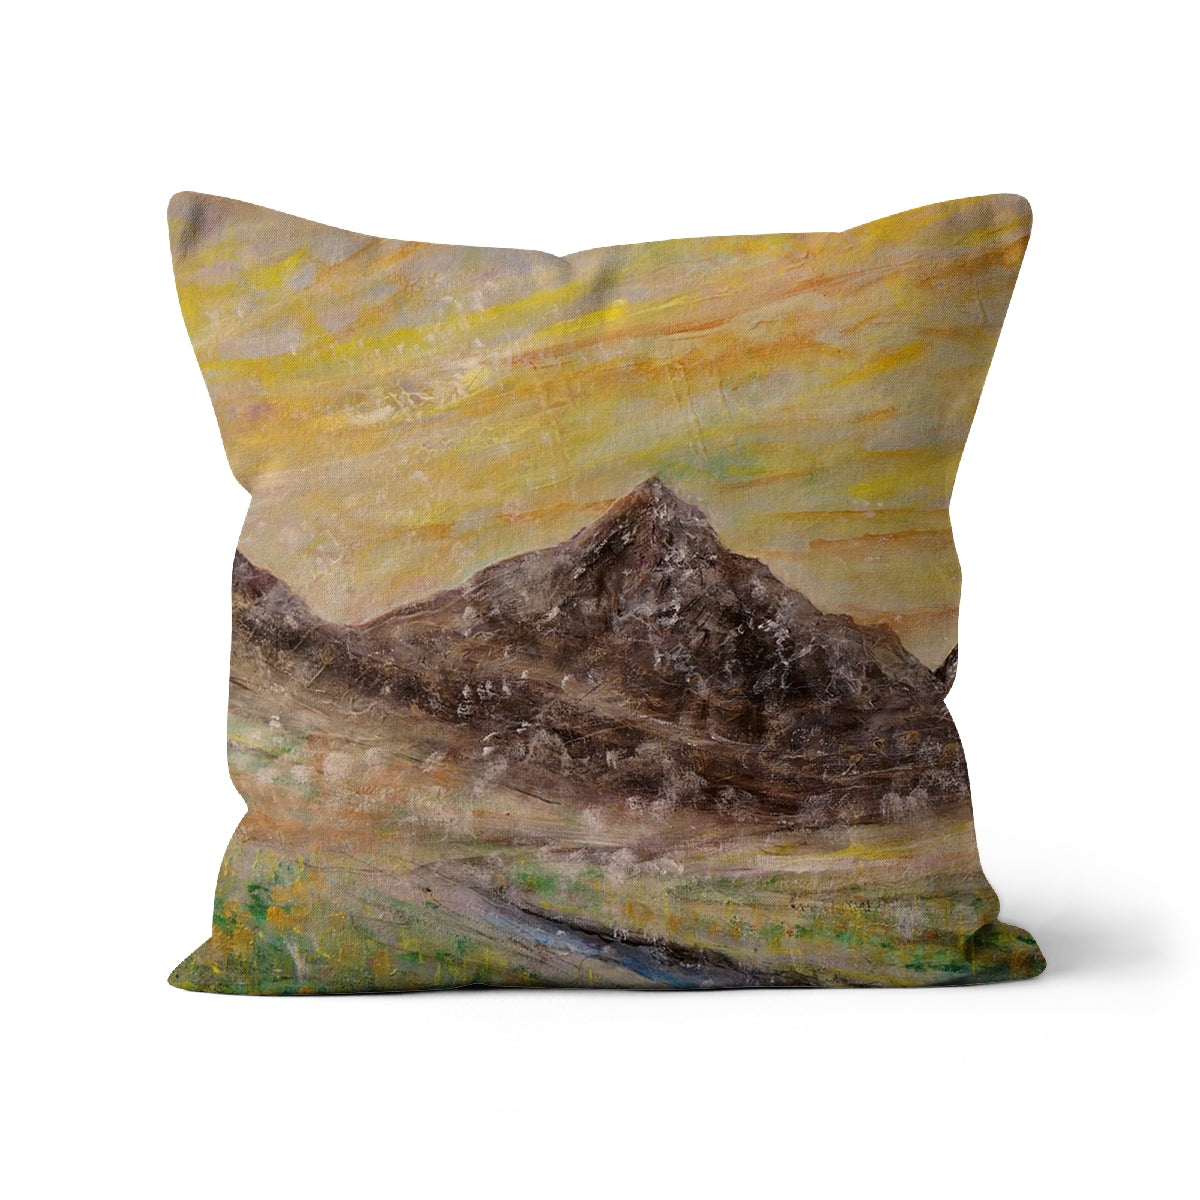 Glen Rosa Mist Arran Art Gifts Cushion-Cushions-Arran Art Gallery-Linen-24"x24"-Paintings, Prints, Homeware, Art Gifts From Scotland By Scottish Artist Kevin Hunter